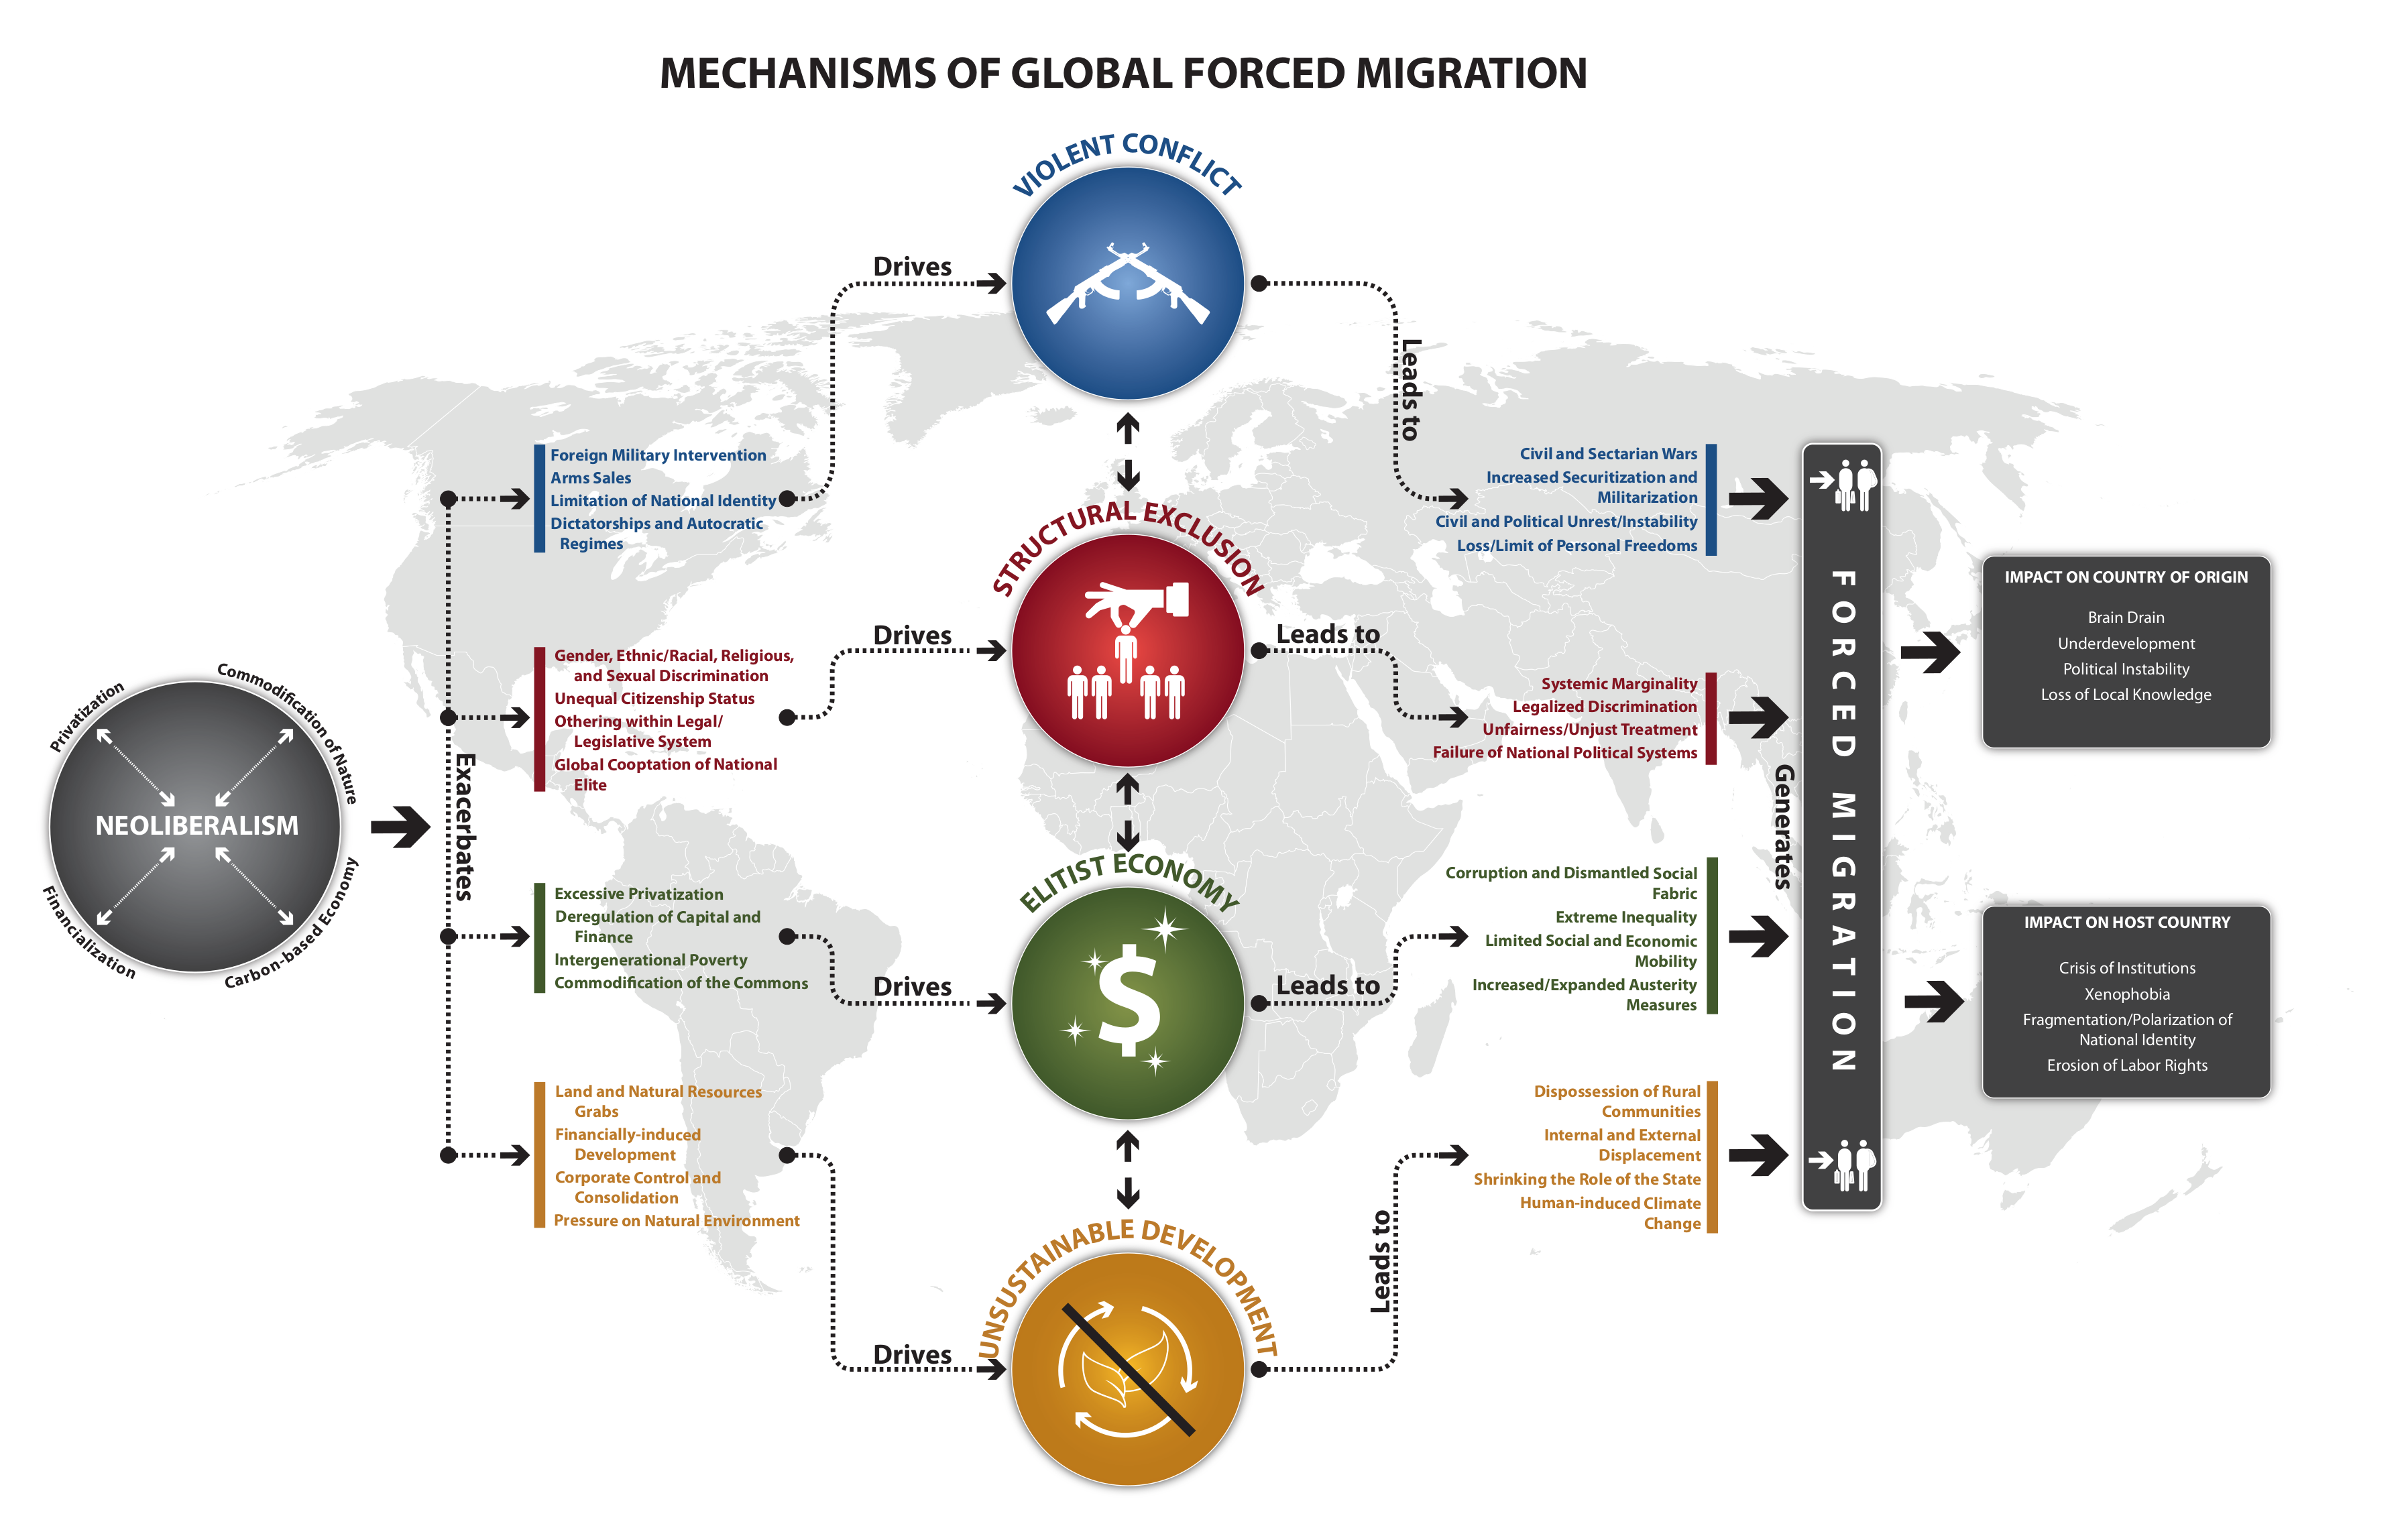 Image on Mechanisms of Global Forced Migration